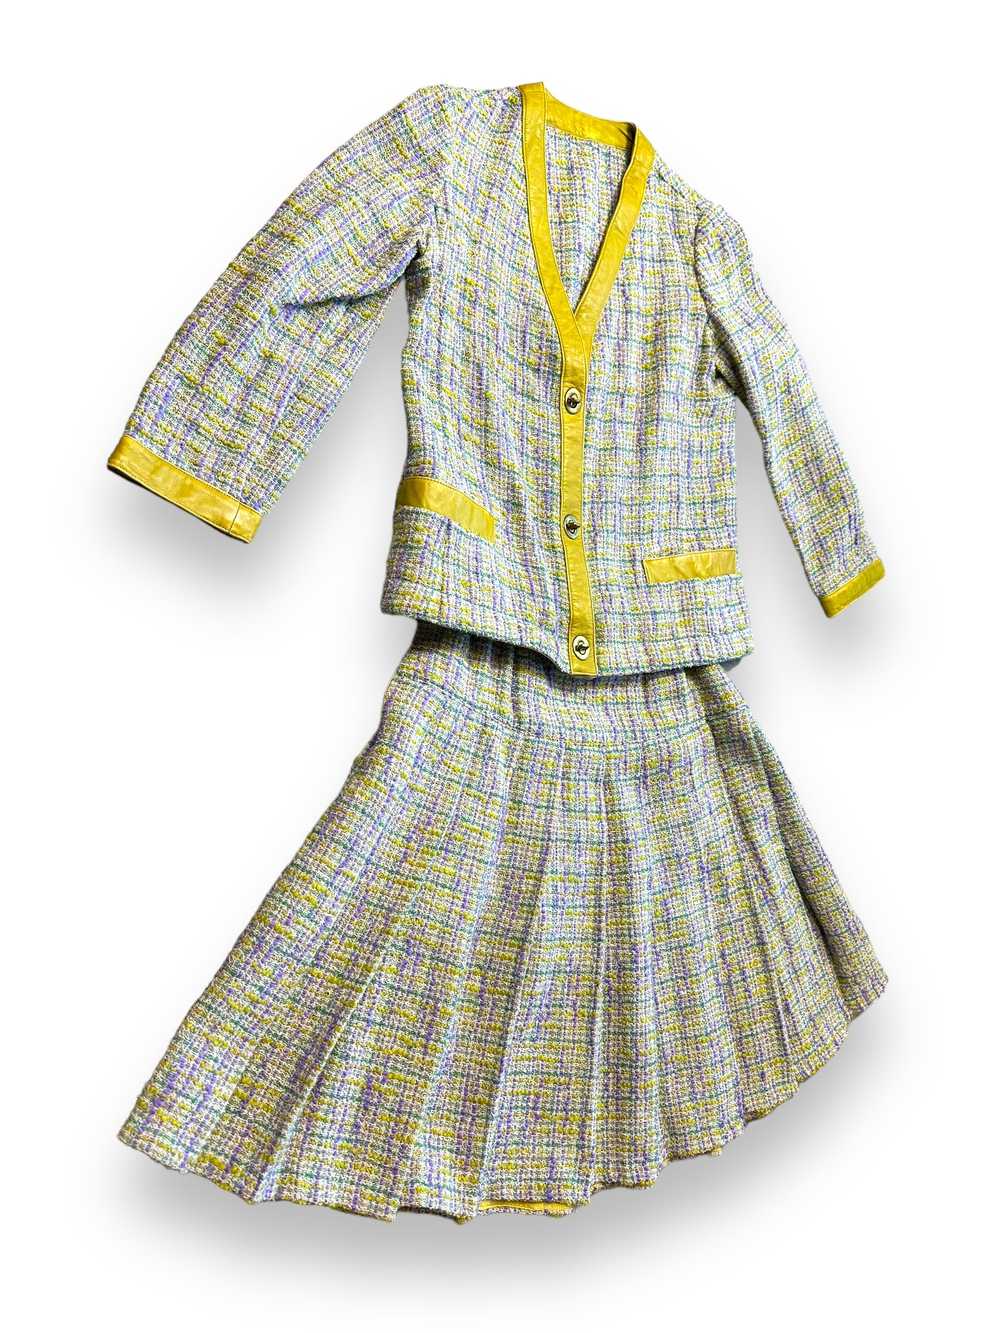 Vintage Bonnie Cashin Sills Tweed 2 Piece Suit - image 4